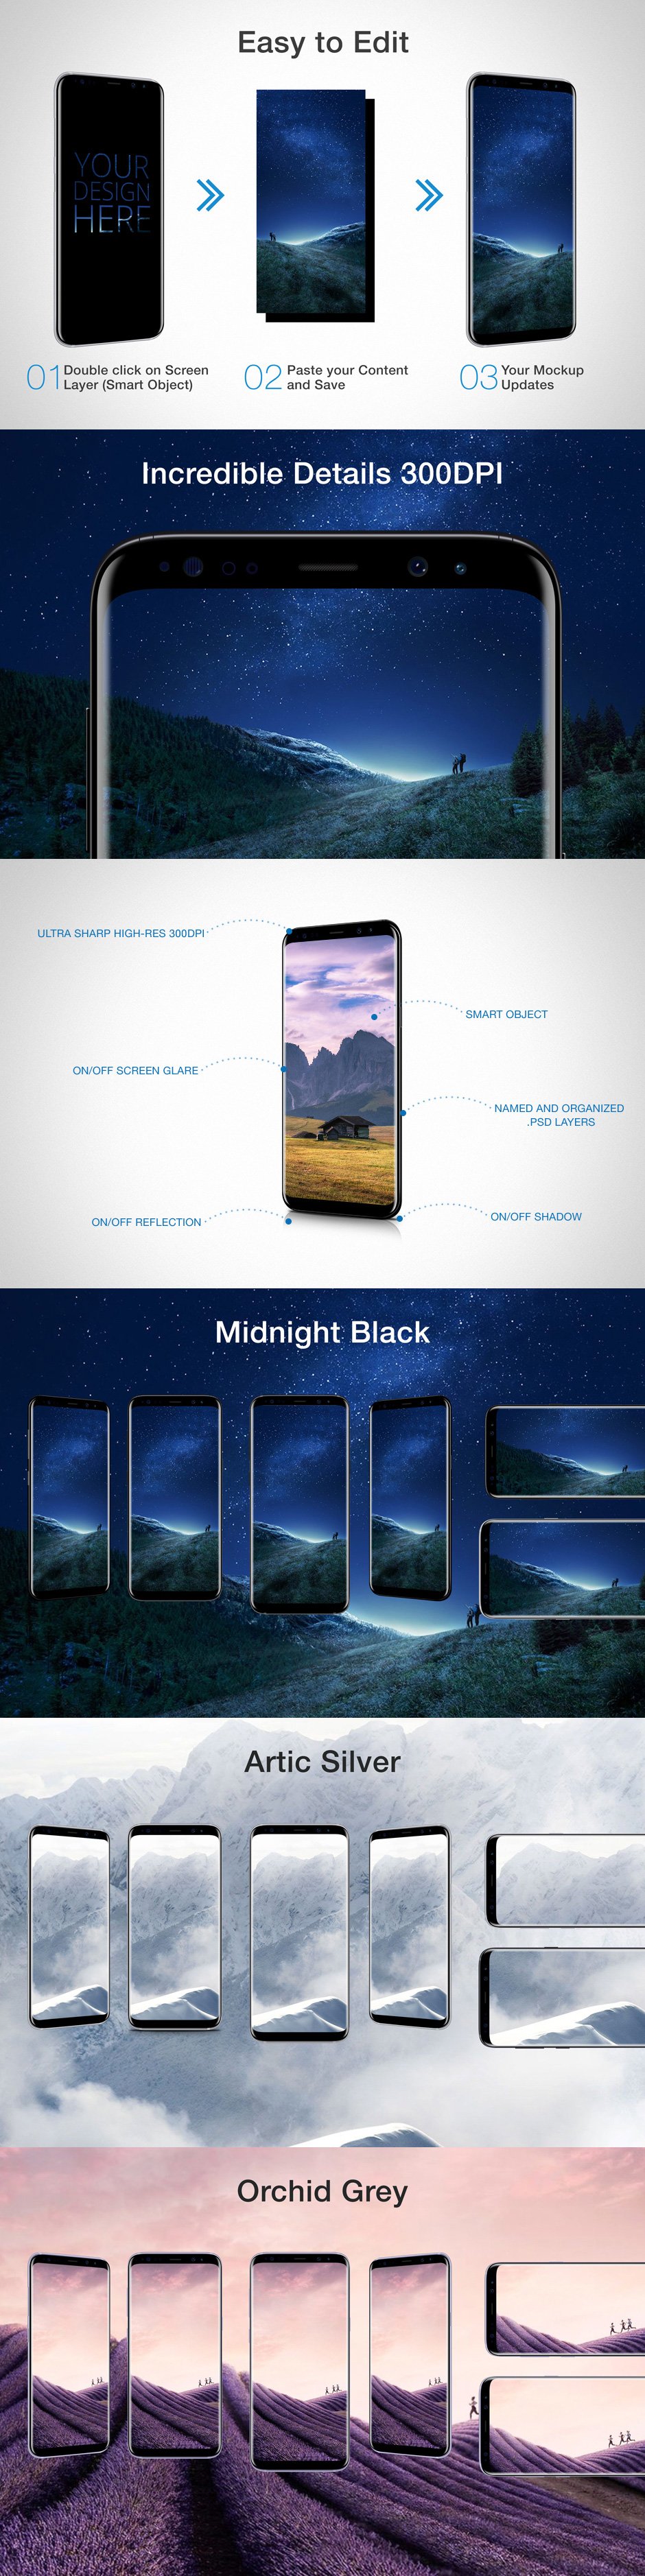 Samsung Galaxy S8 Android Mockups